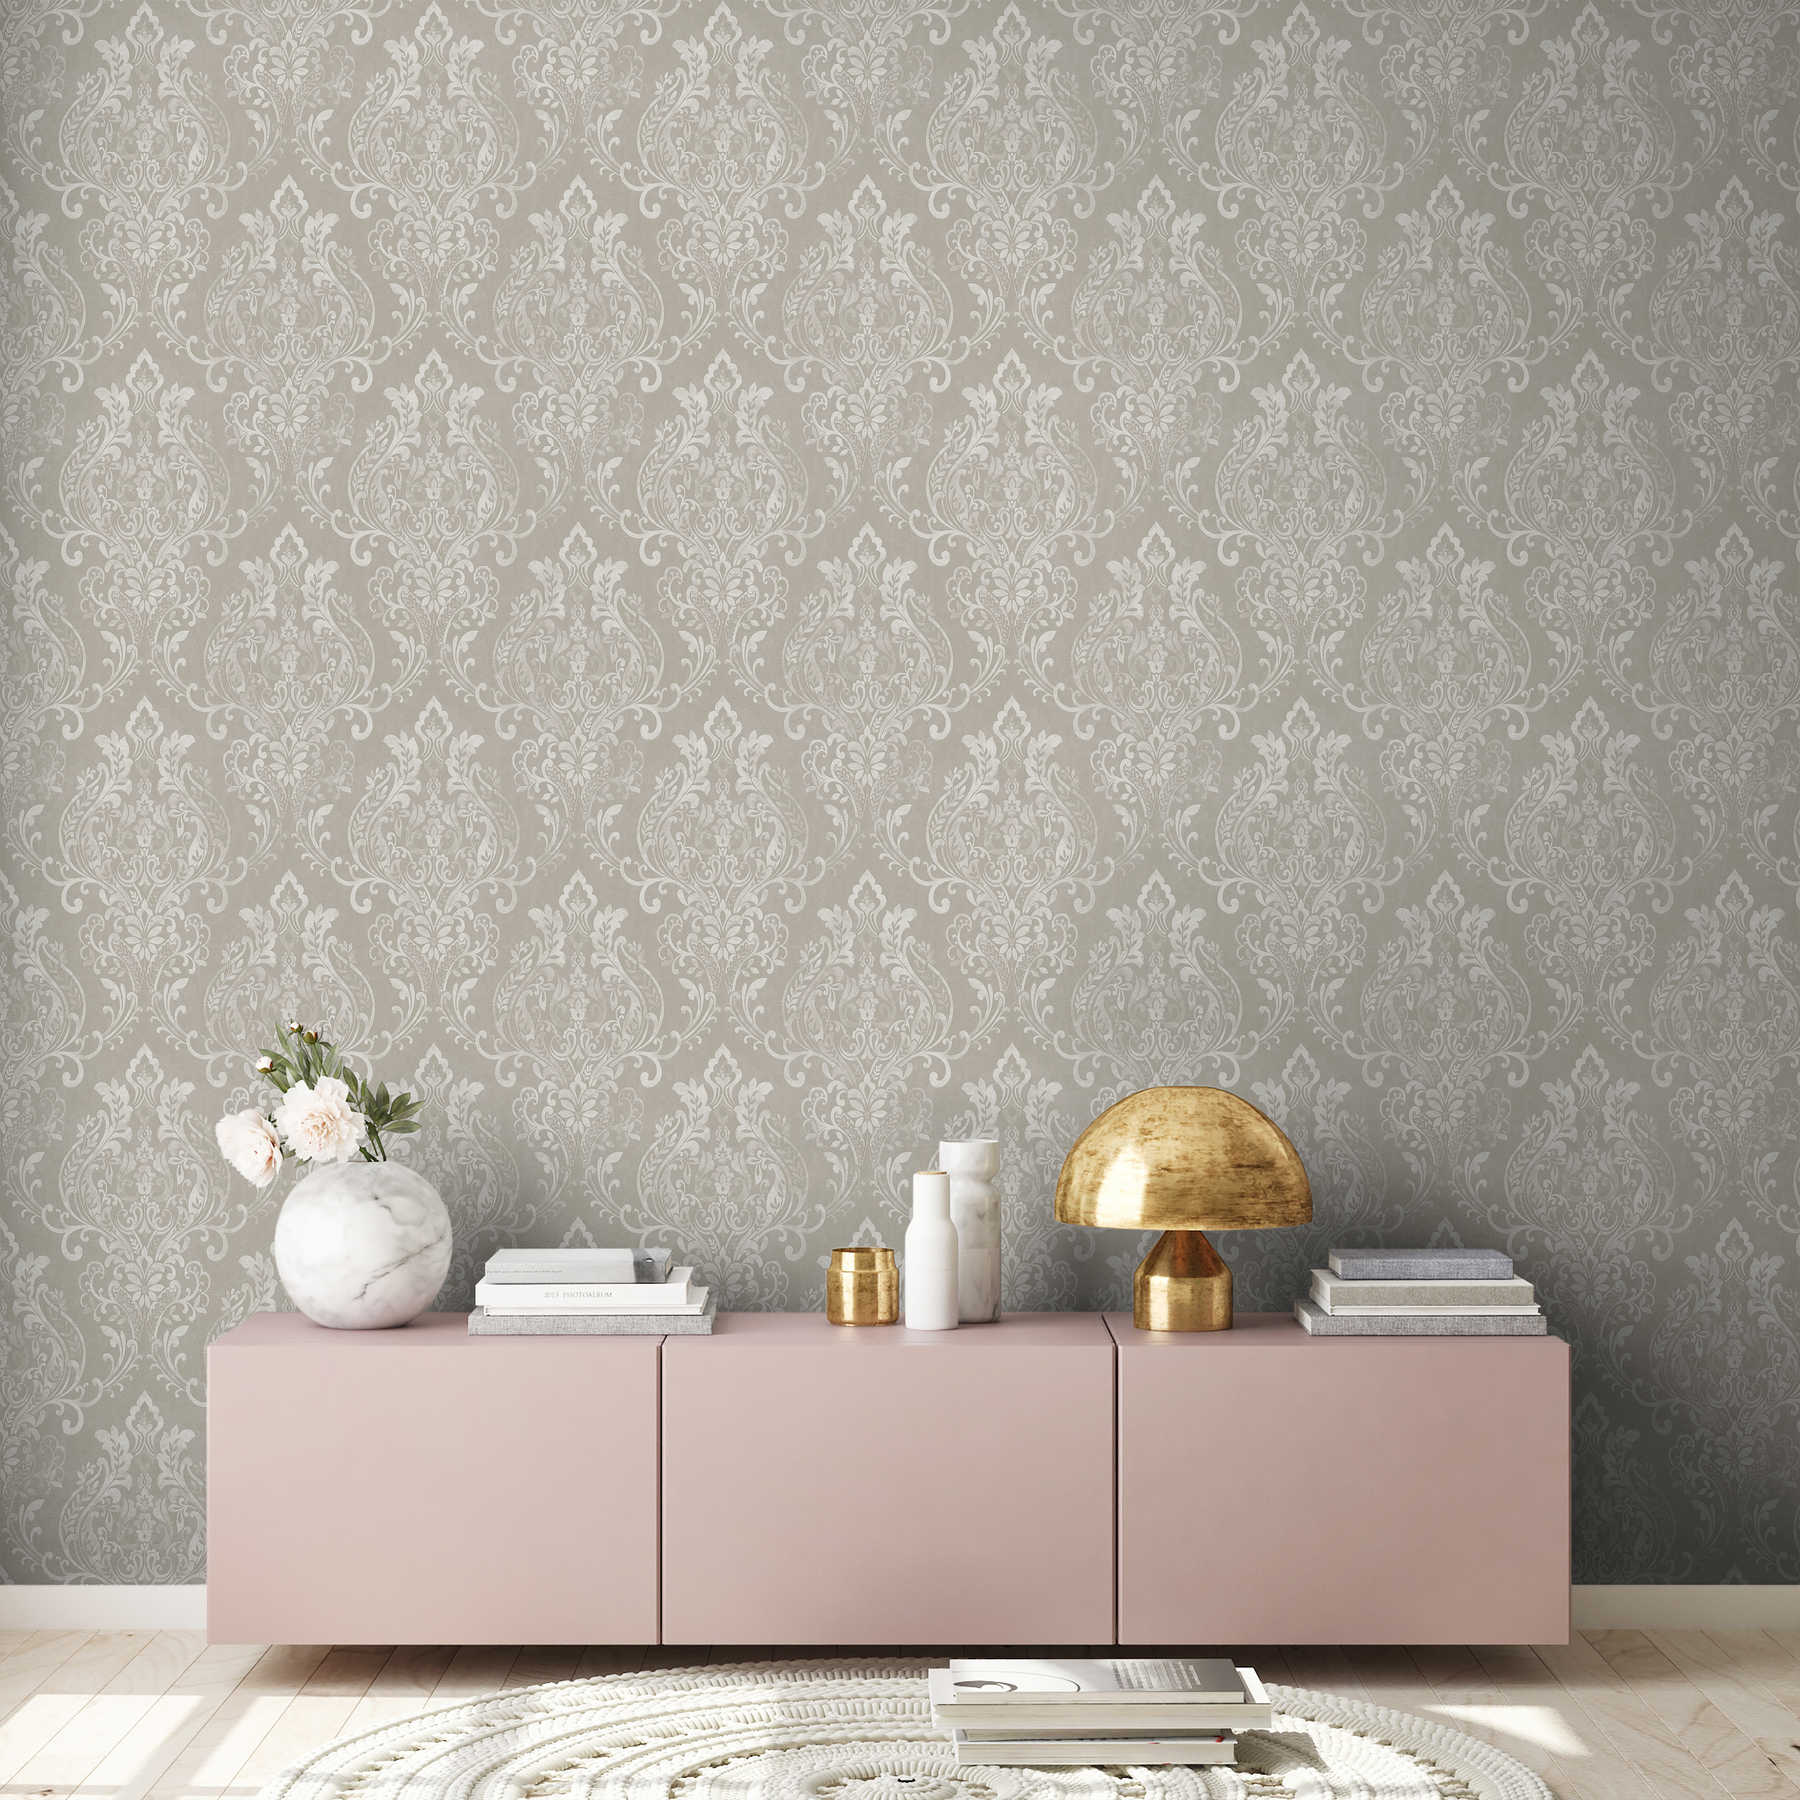             Retro wallpaper used look & ornaments - beige, cream, grey
        